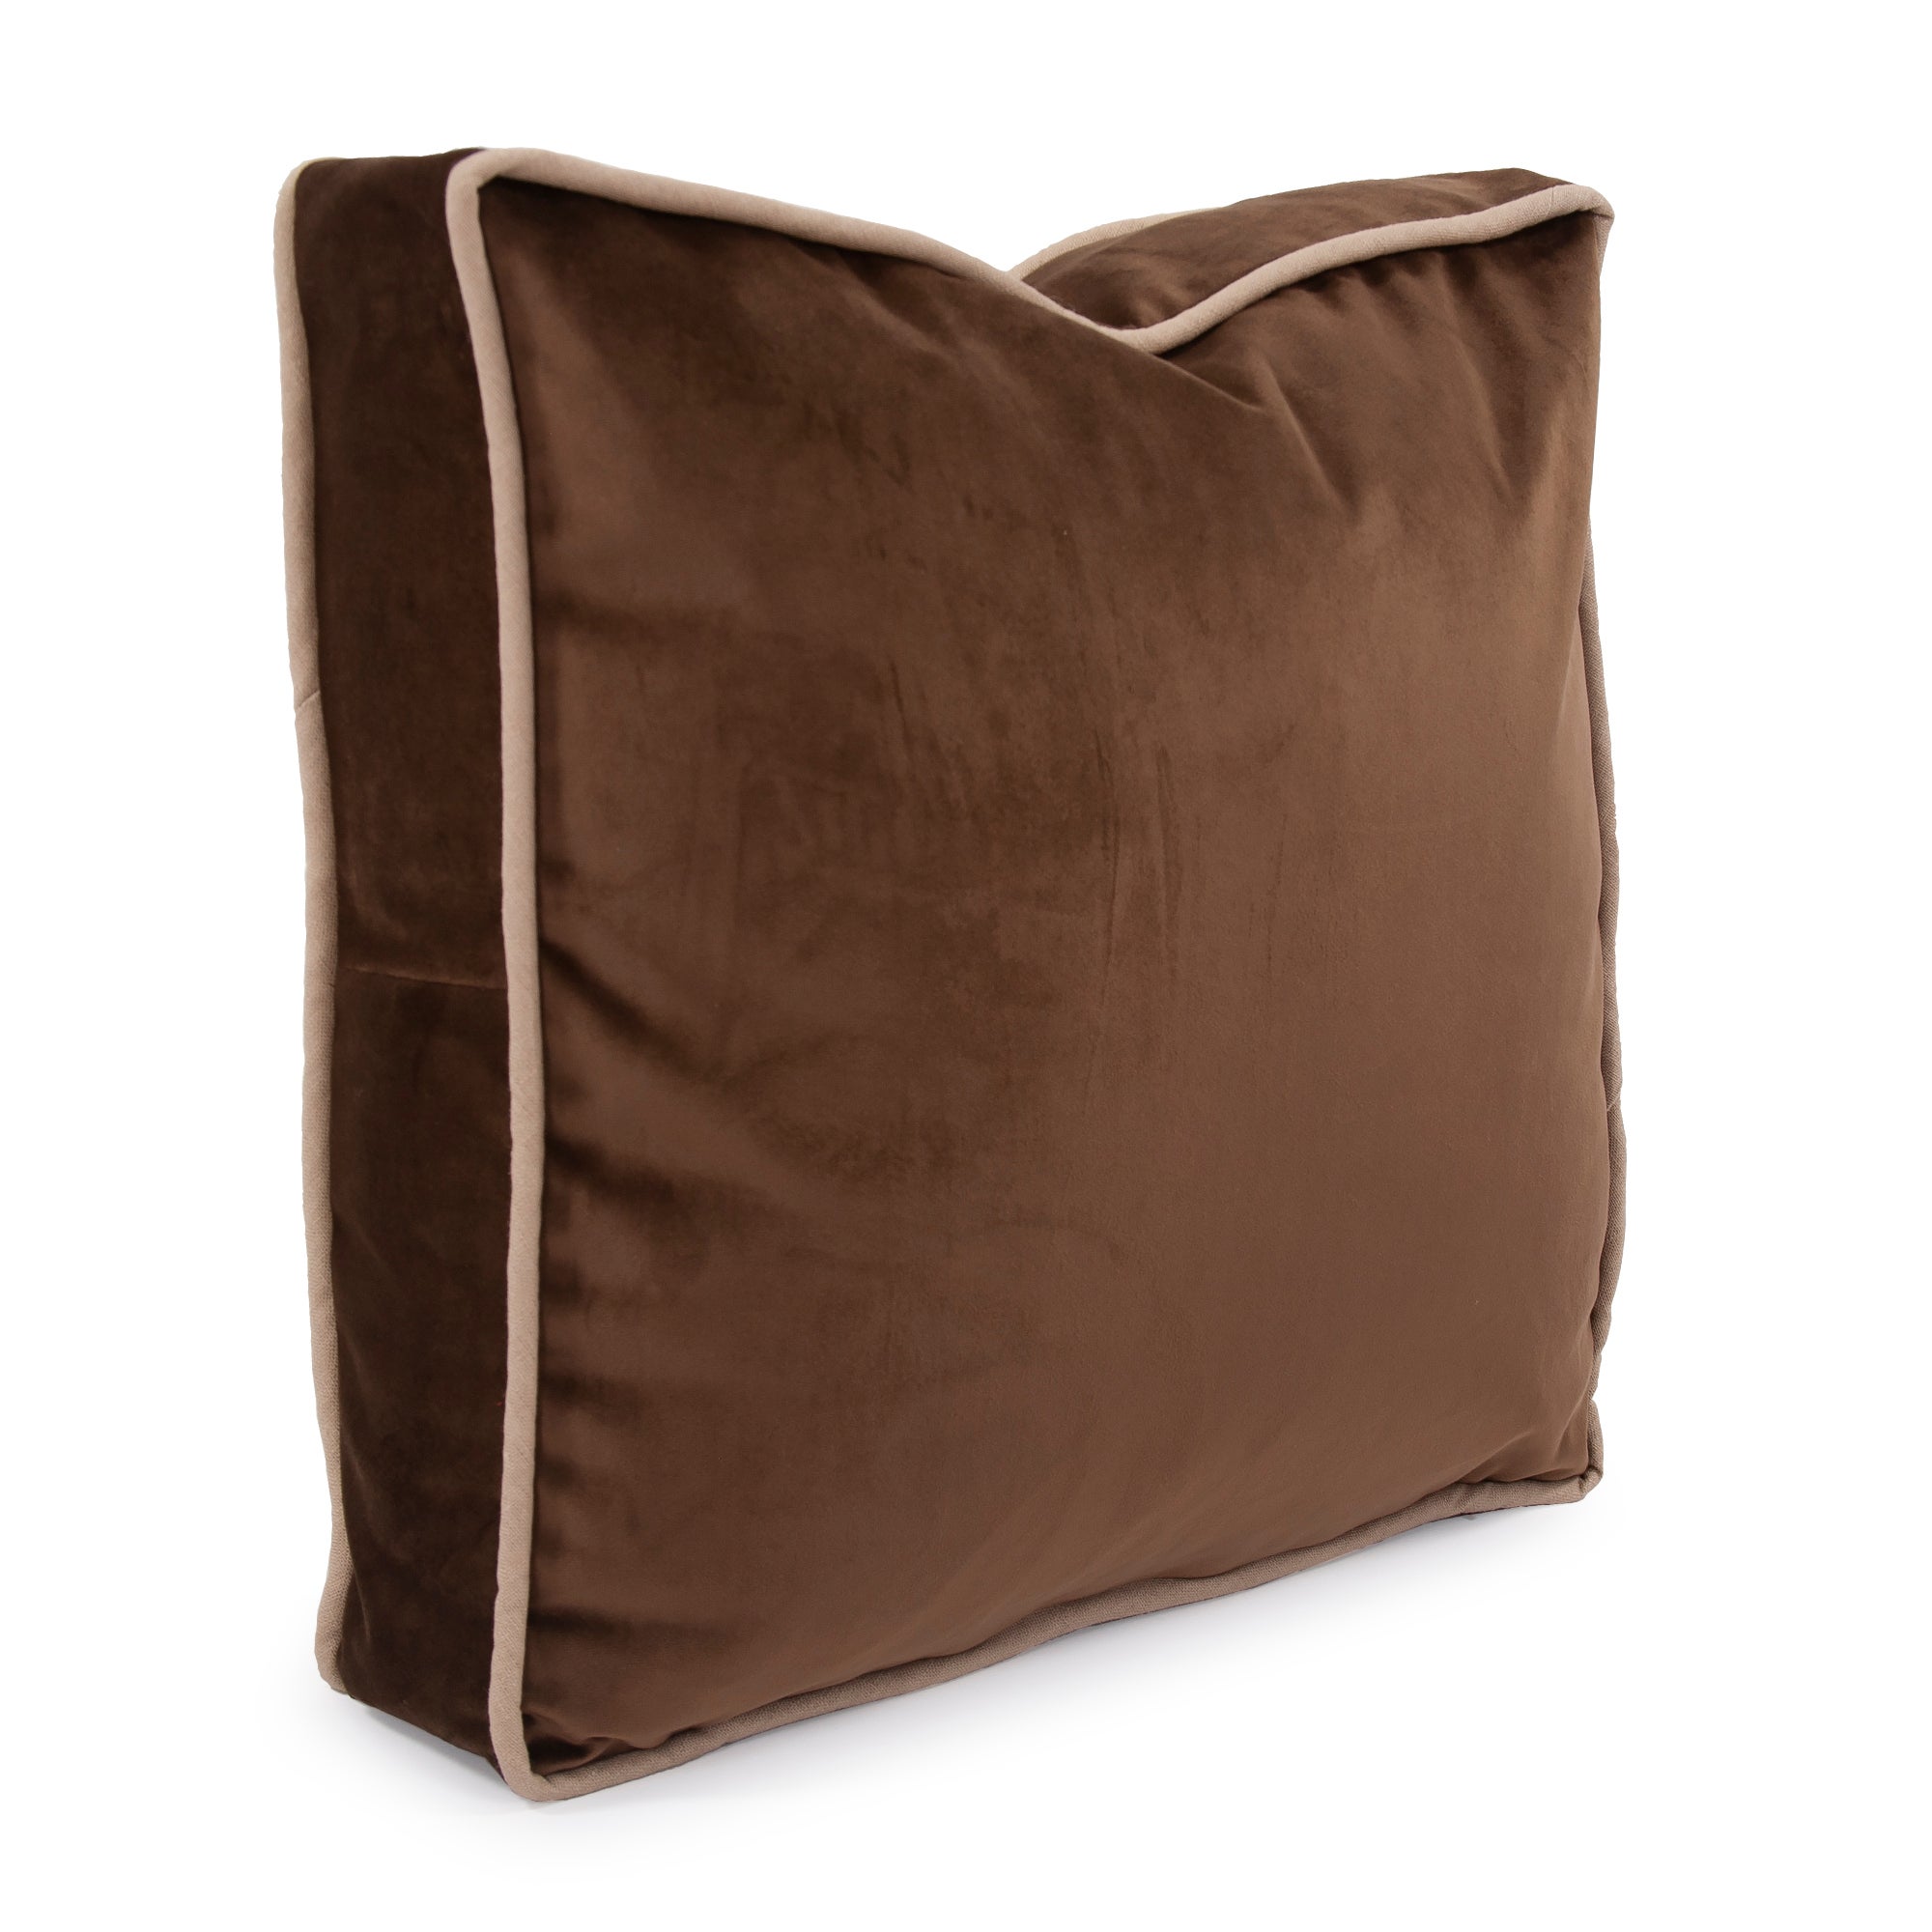 Davida Kay Prairie Linen with Deco Trim Pillows Down Insert Howard Elliot 2-610F 20 x 20 in